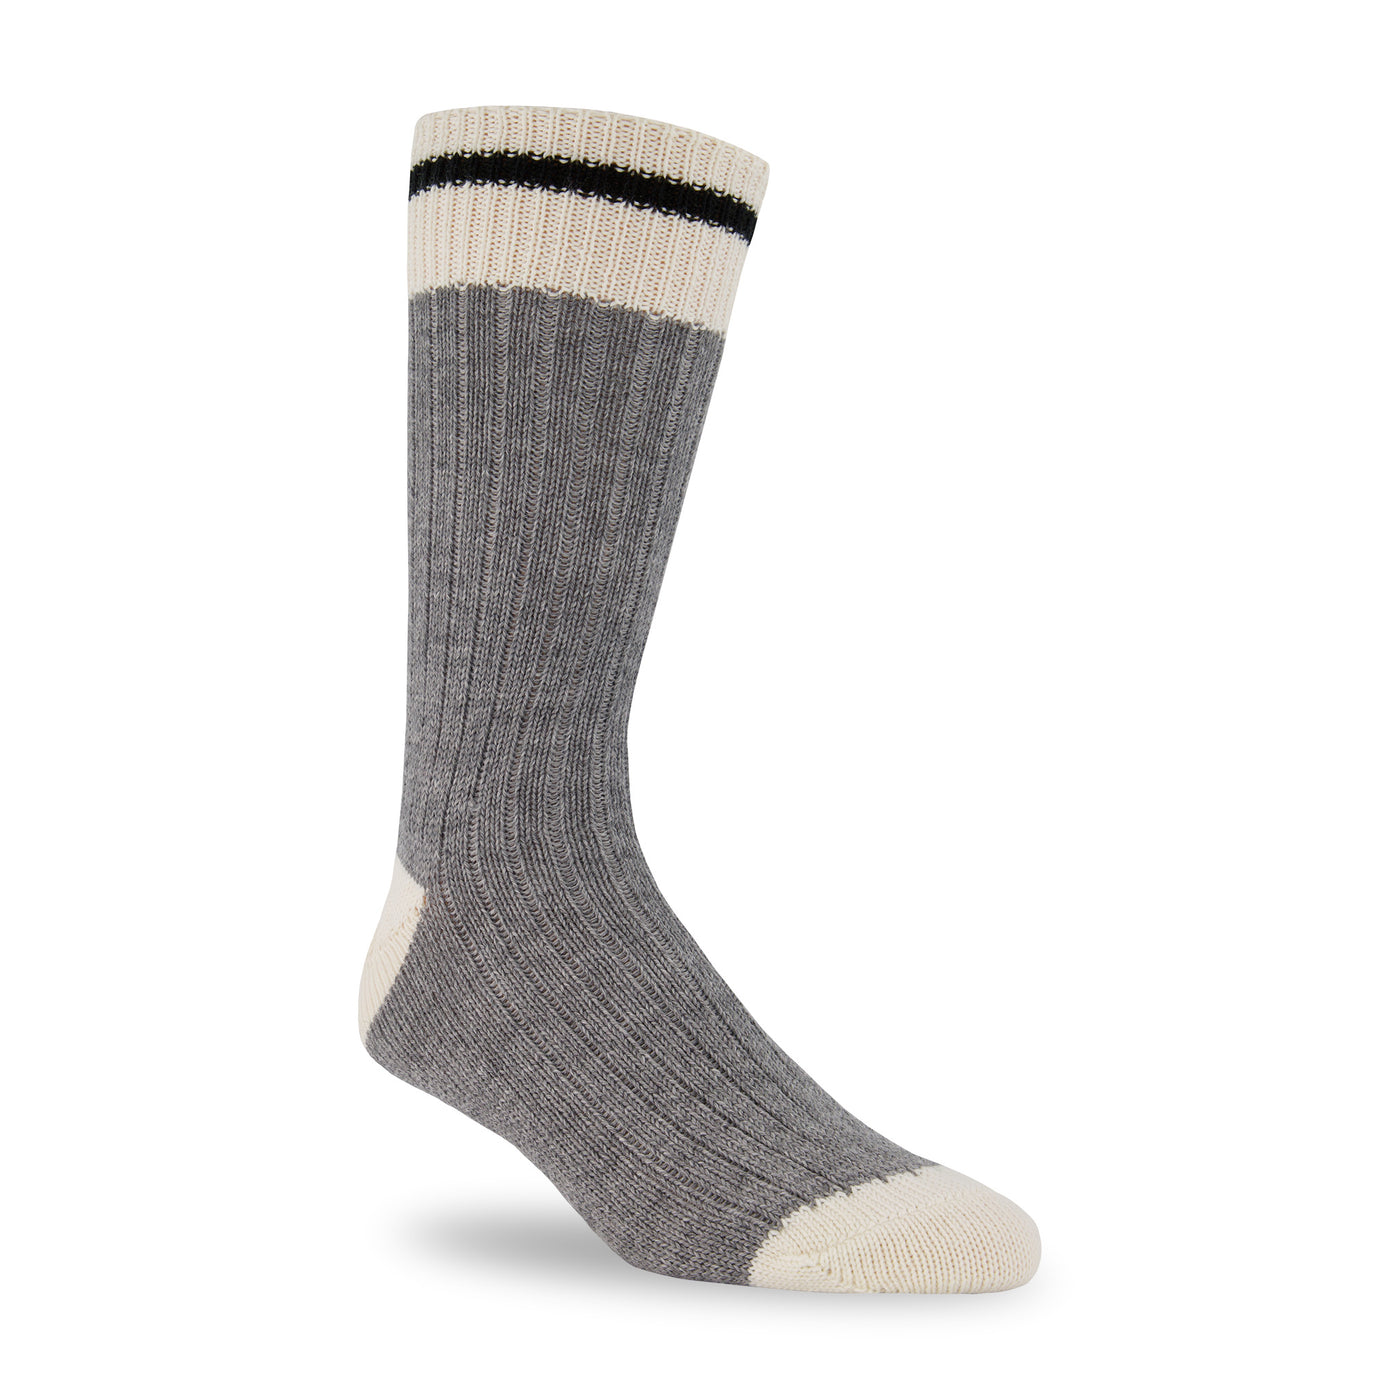 J.B. Field's Casual "Traditional Wool" Boot Sock